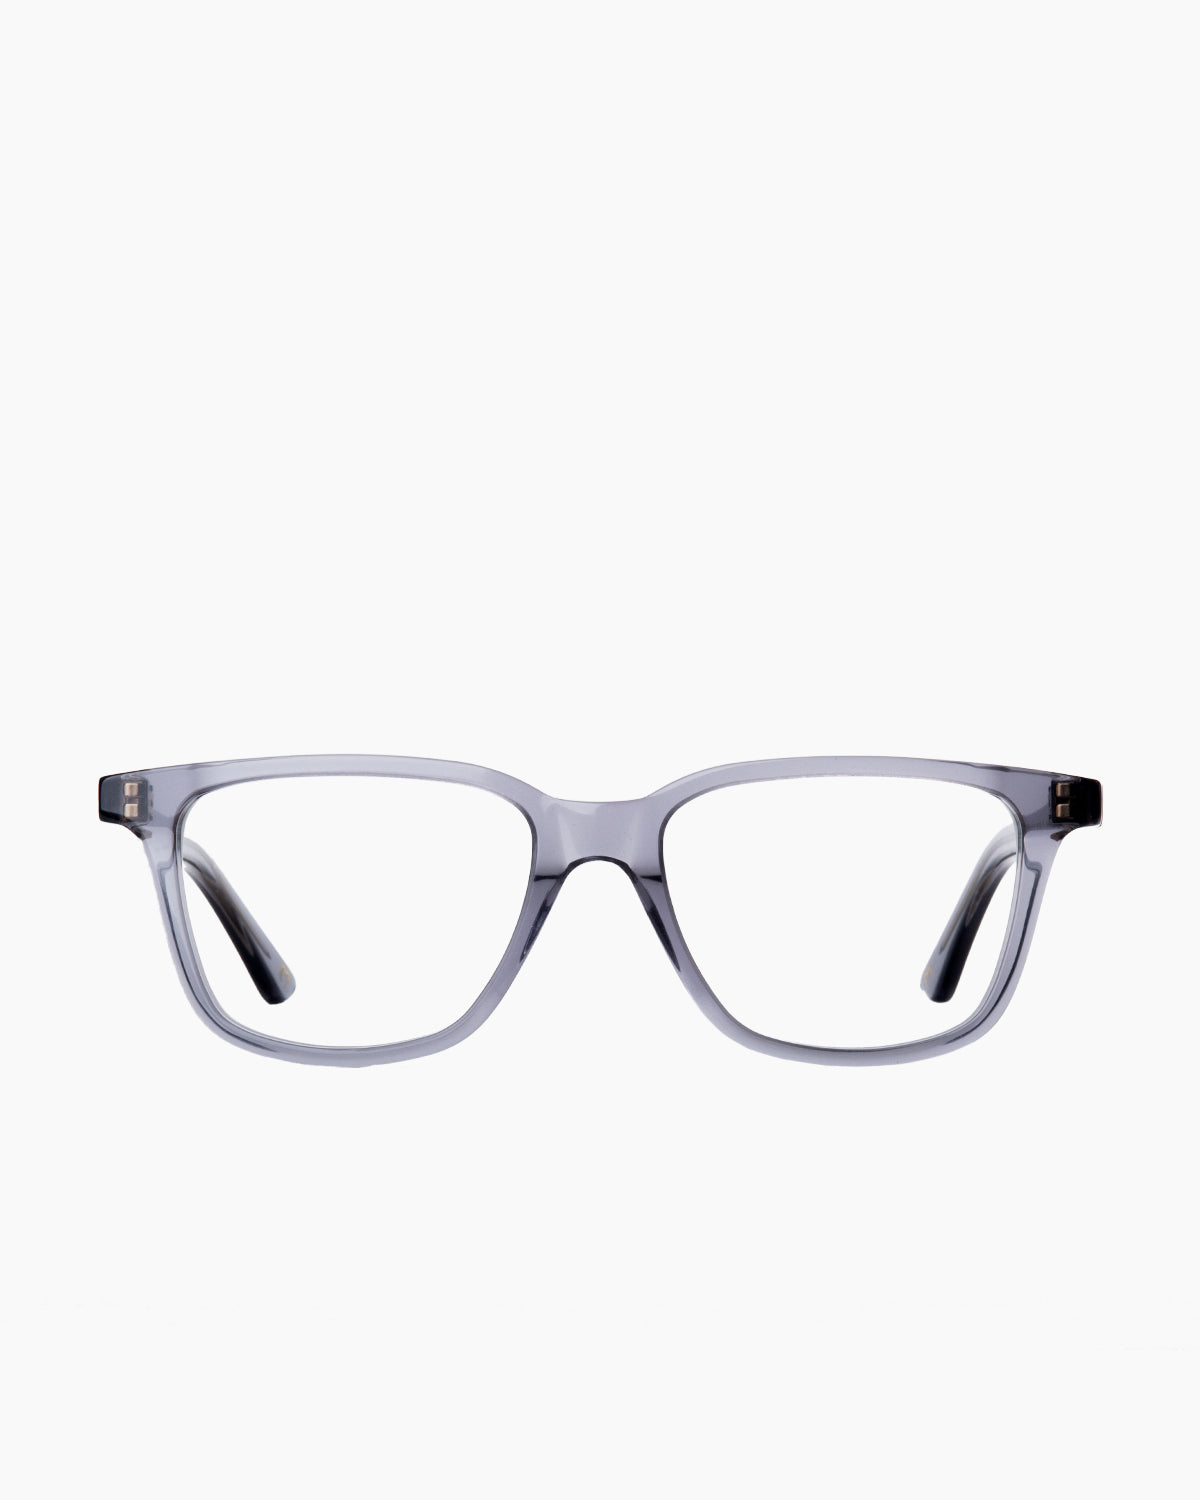 Spectacleeyeworks - Ilan - c731 | Bar à lunettes:  Marie-Sophie Dion